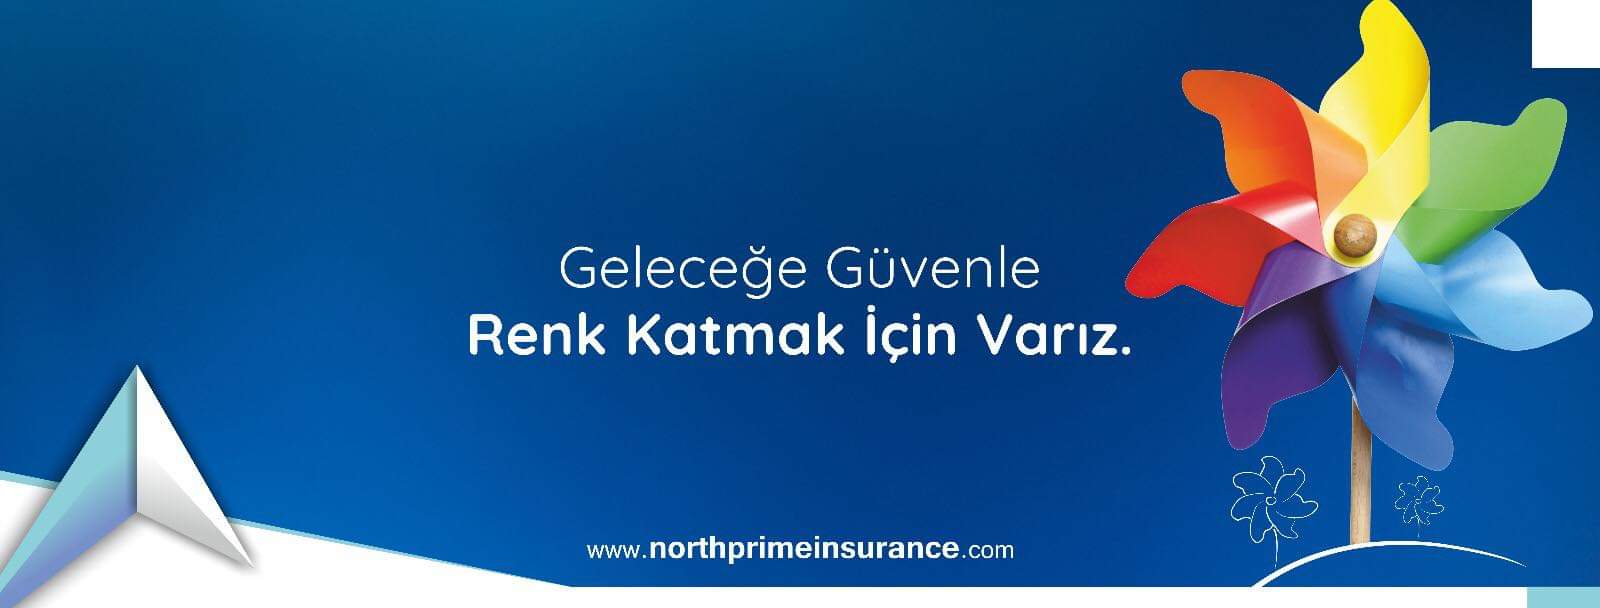 Northprime Insurance